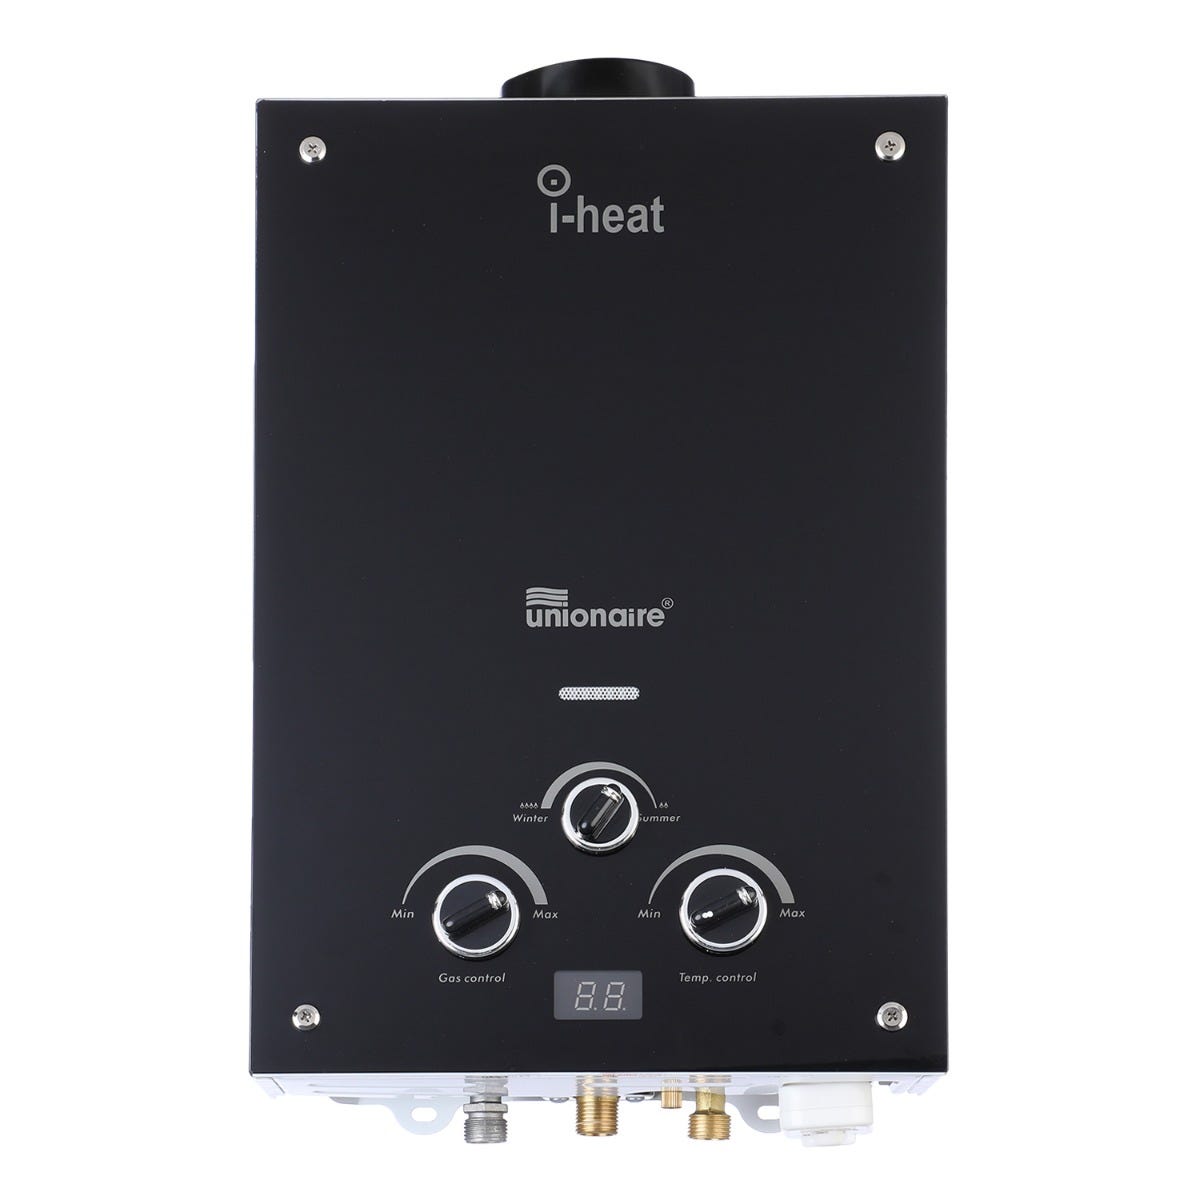 Unionaire i-Heat Gas Digital Water Heater, 6 Liters, Black- UGH060D